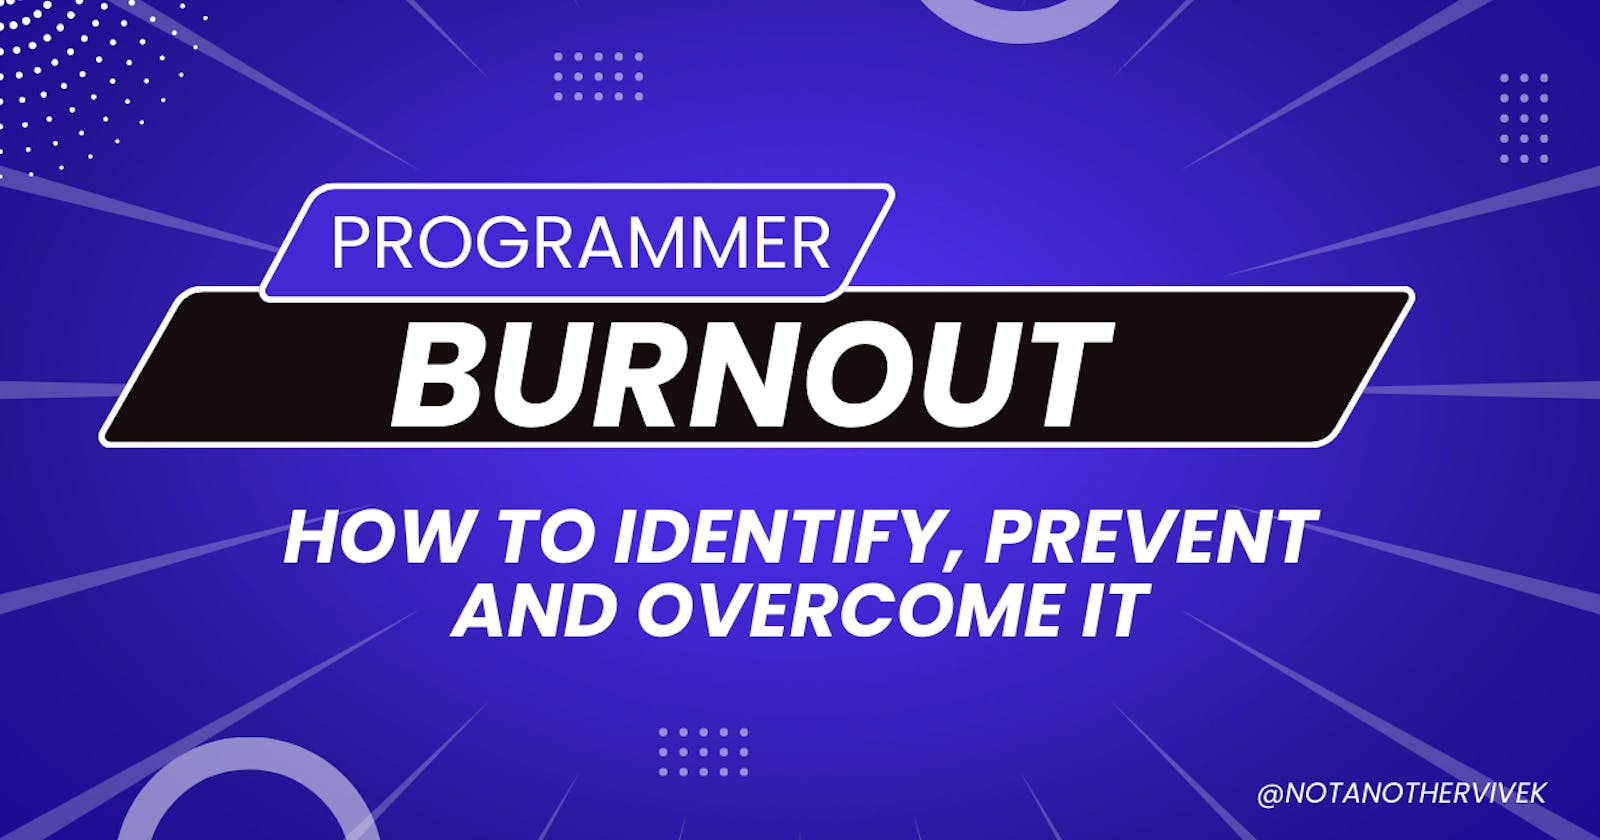 Programmer Burnout - identify, prevent and overcome it